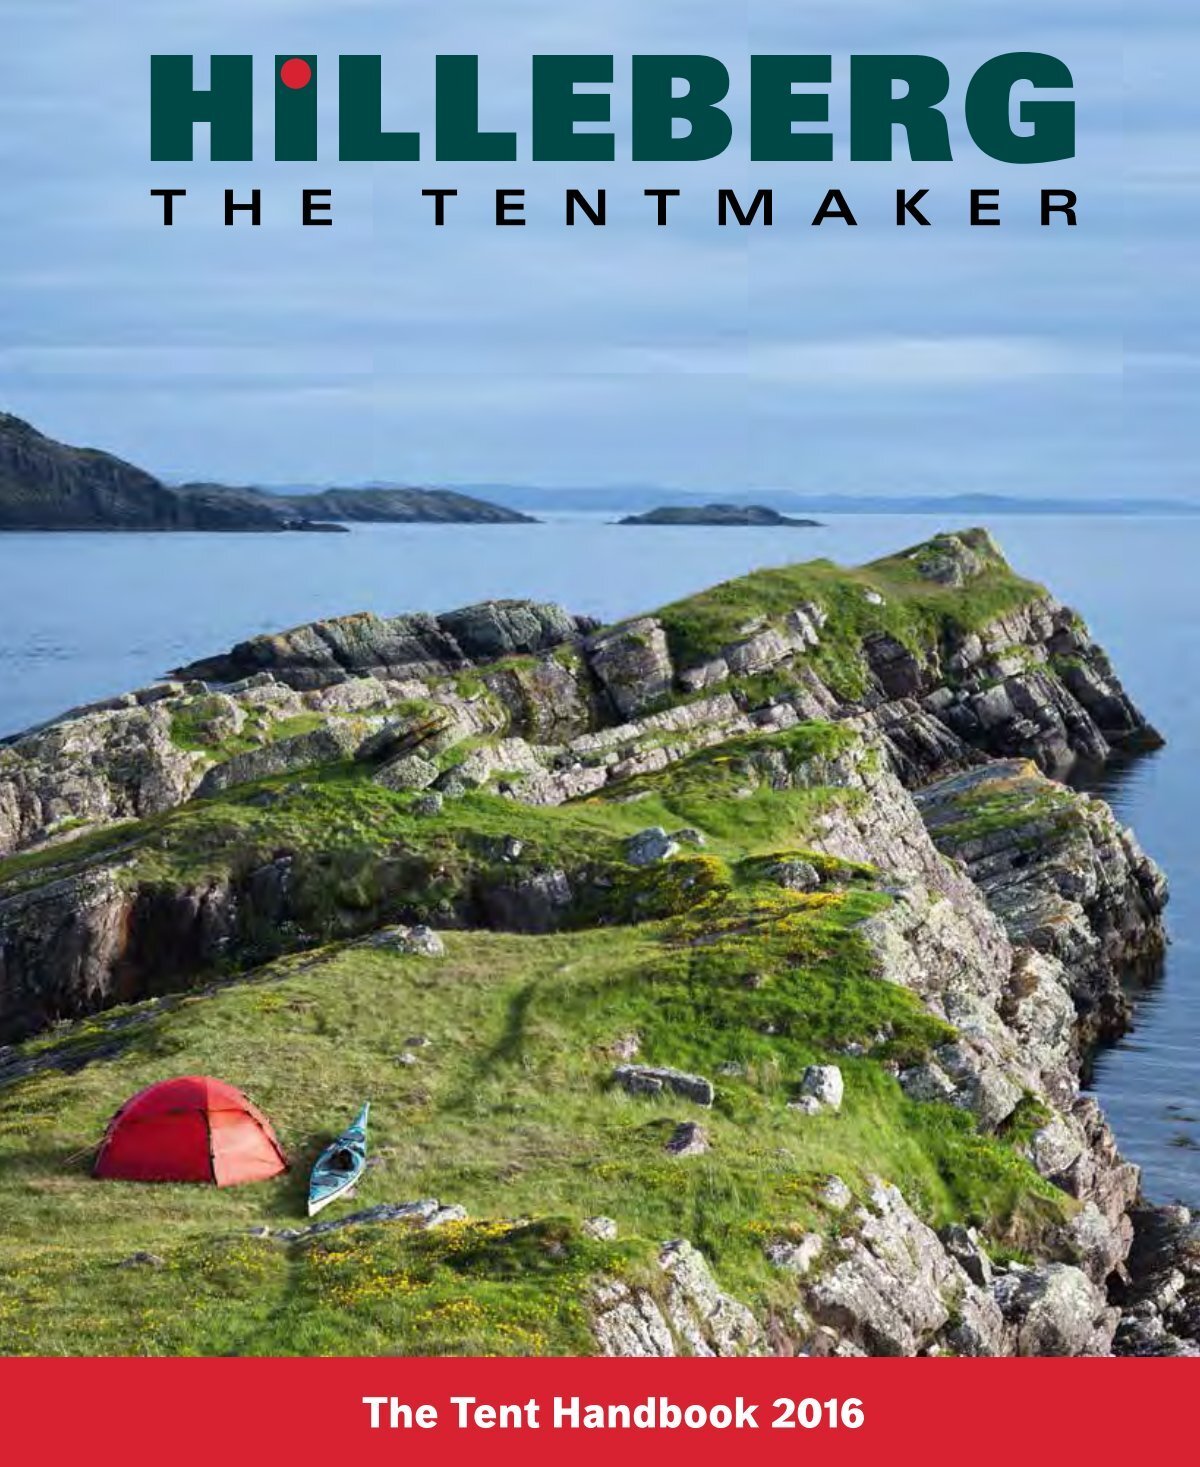 The Tent Handbook 2016